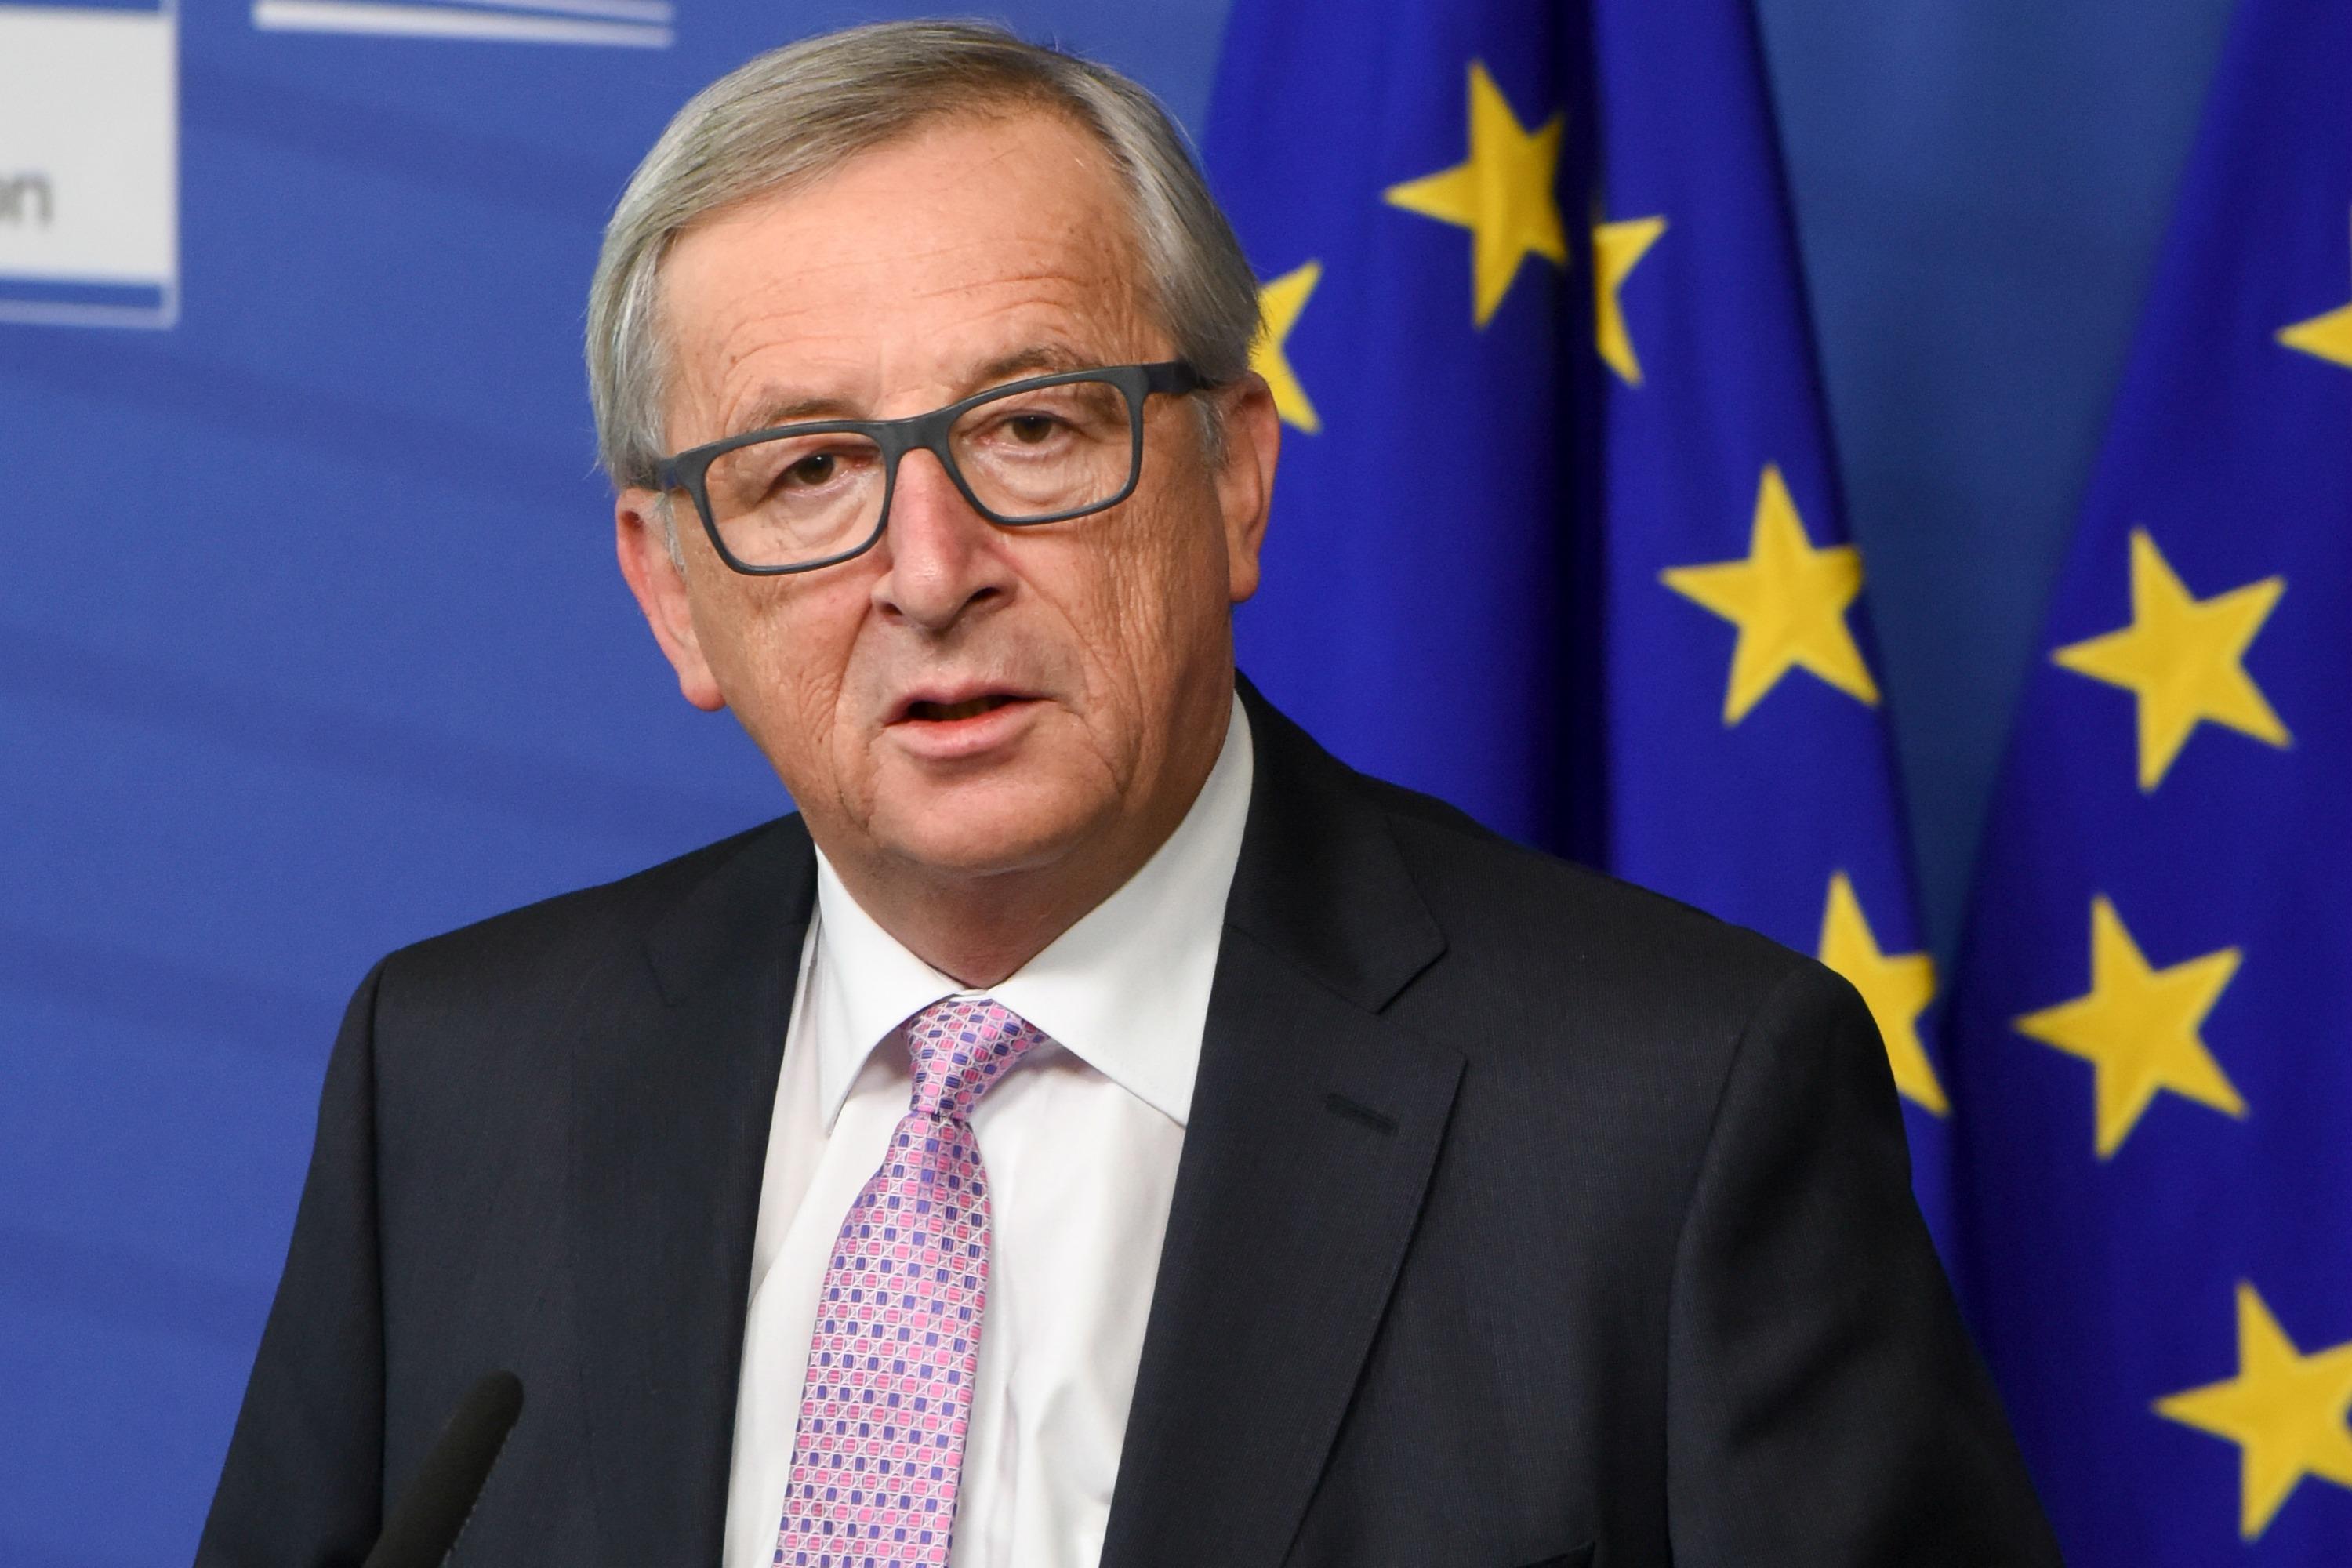 EC President Juncker Meets Soros To Discuss Higher Education Act